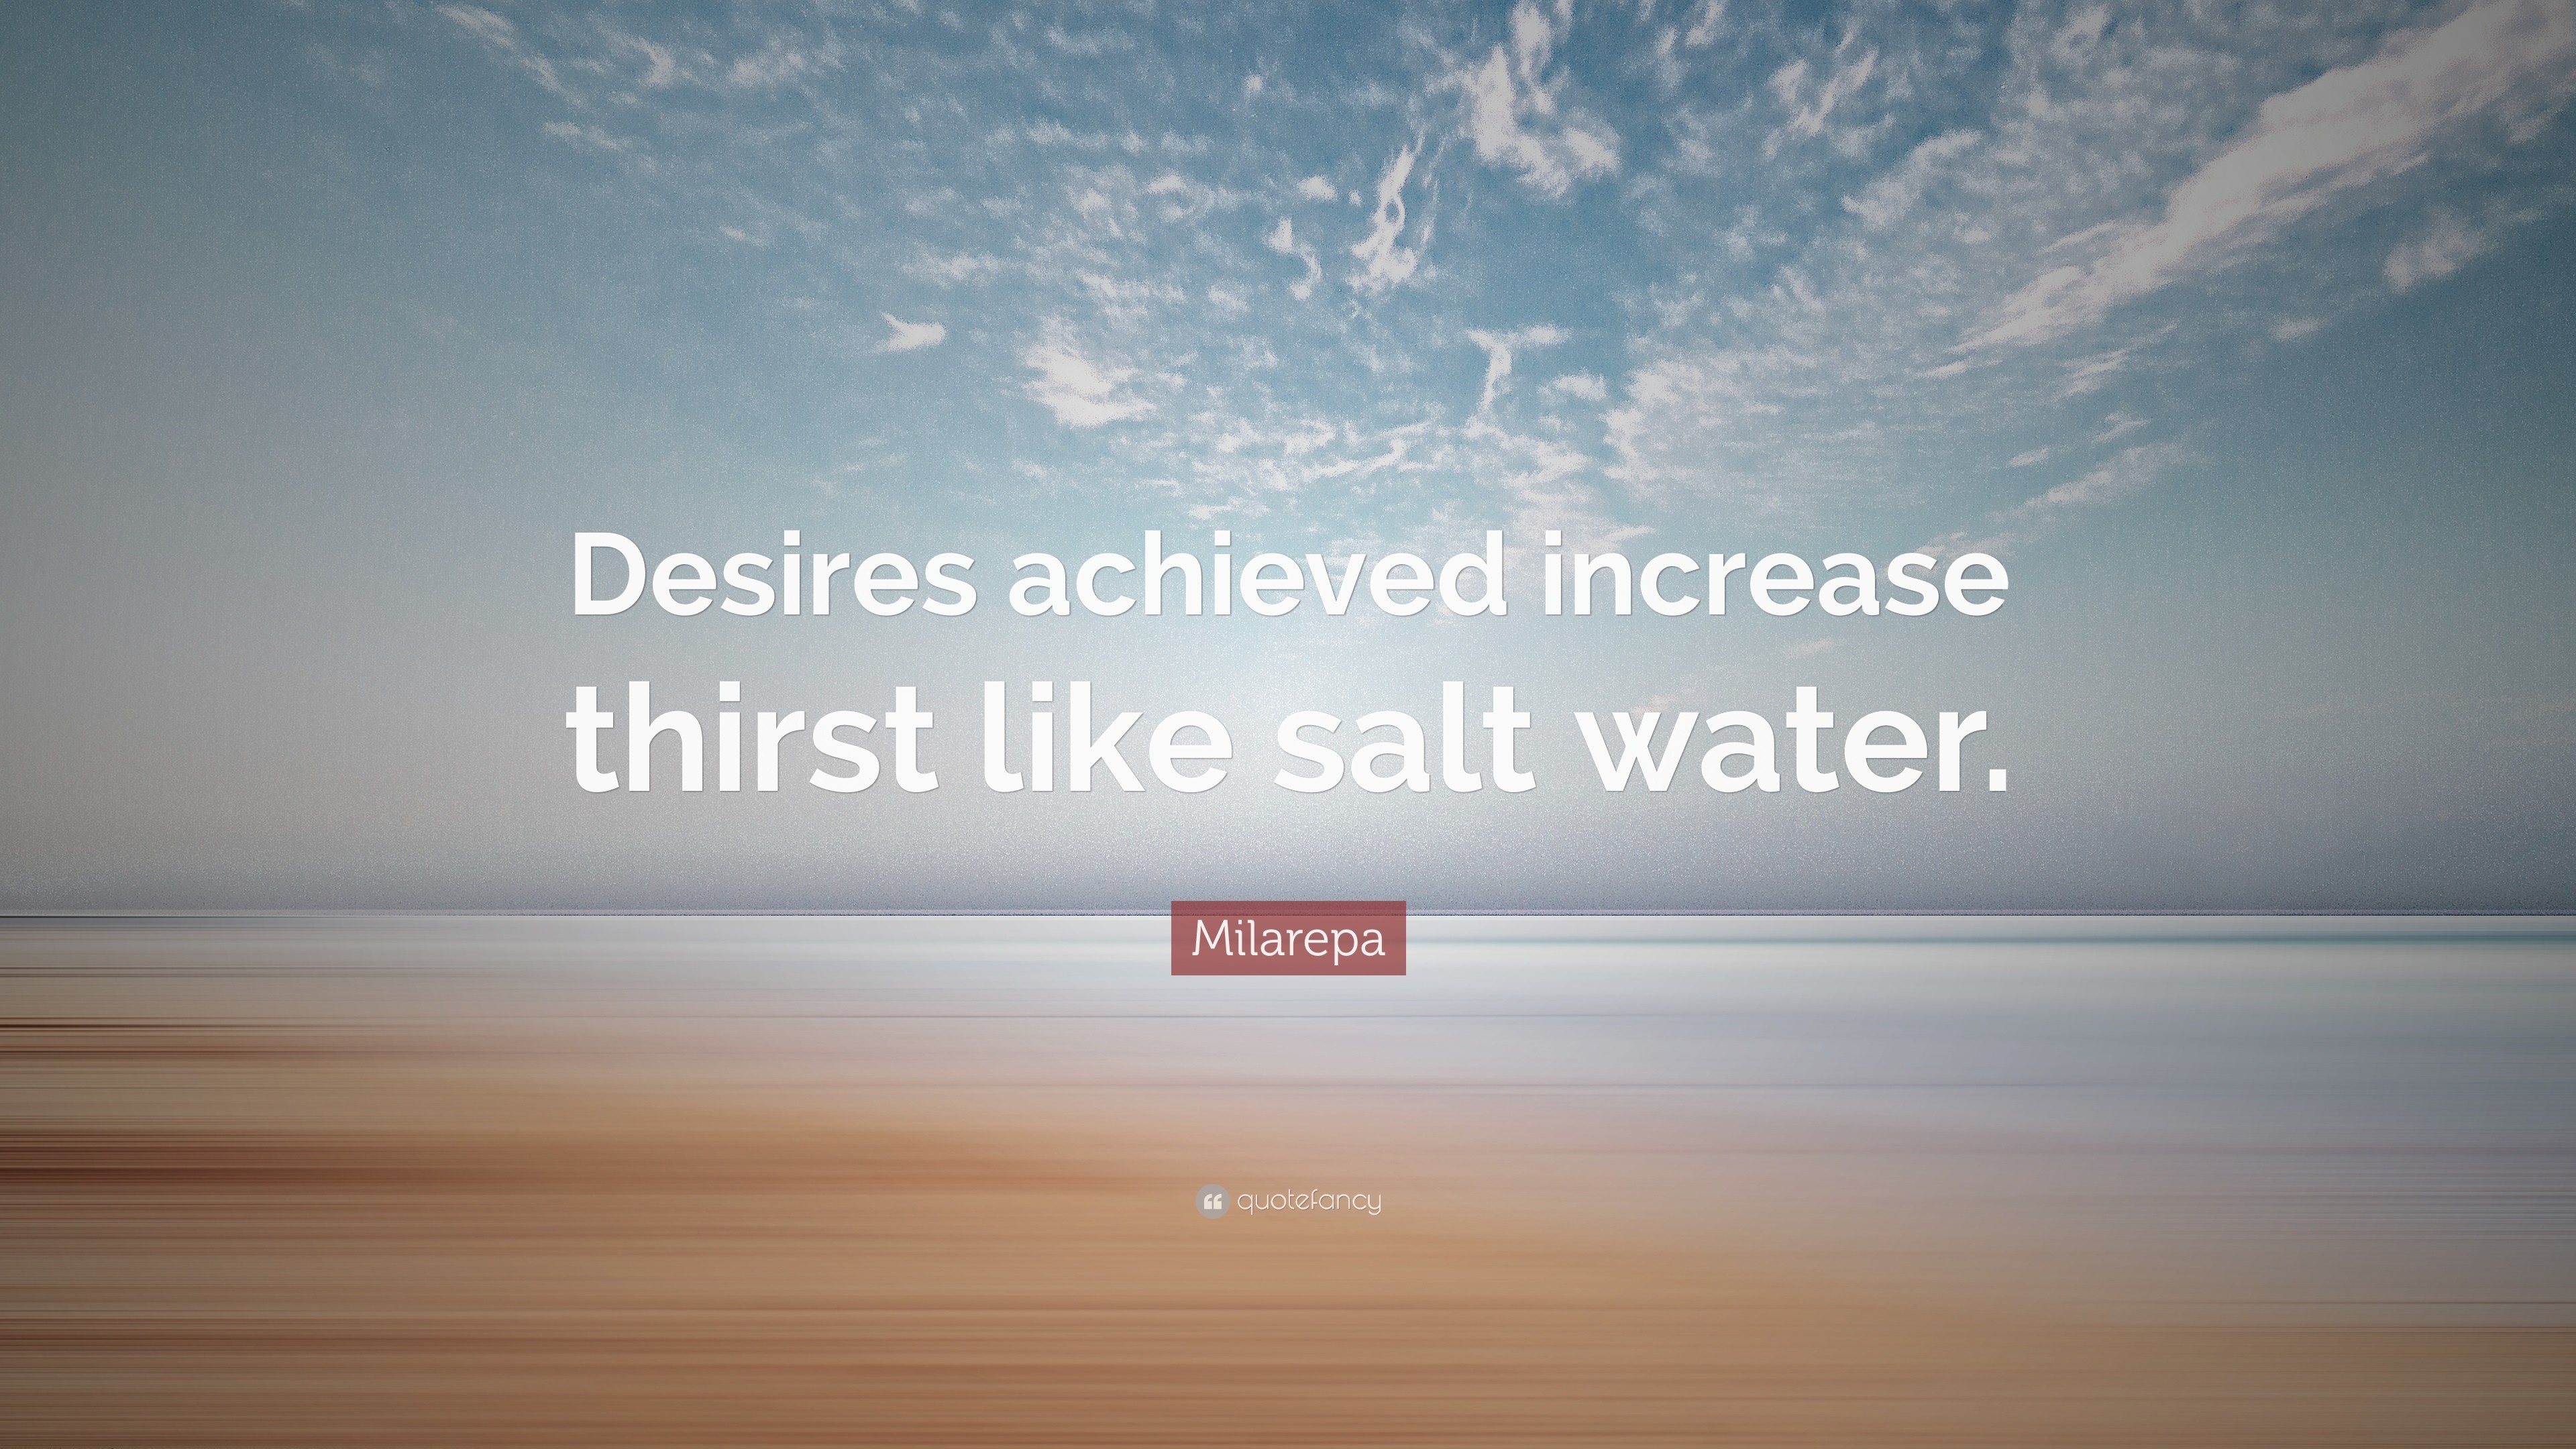 Milarepa Quote: “Desires achieved increase thirst like salt water.”